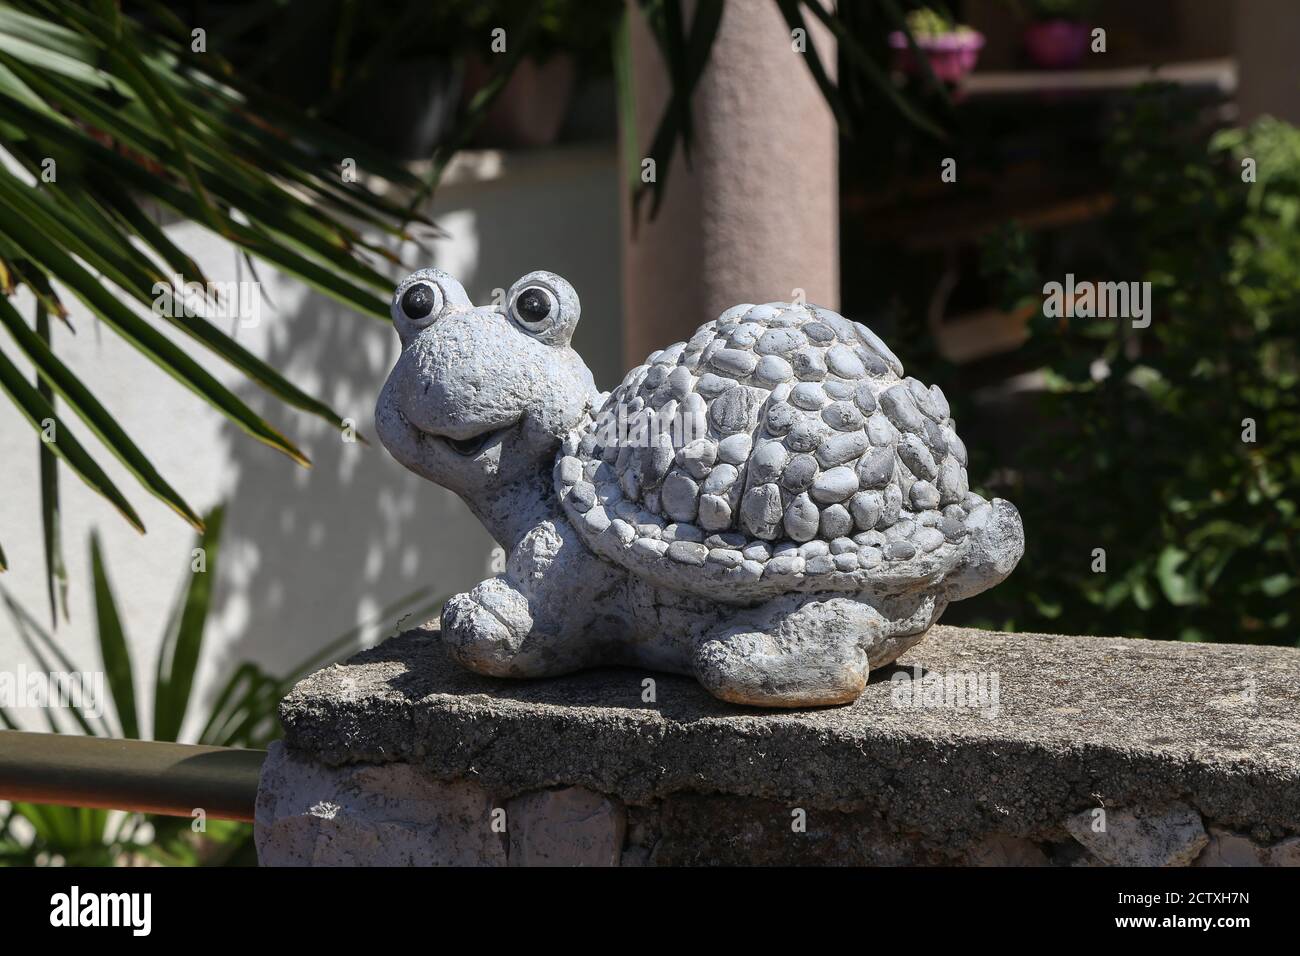 Lustige Deko Schildkröte im Garten Stockfotografie - Alamy